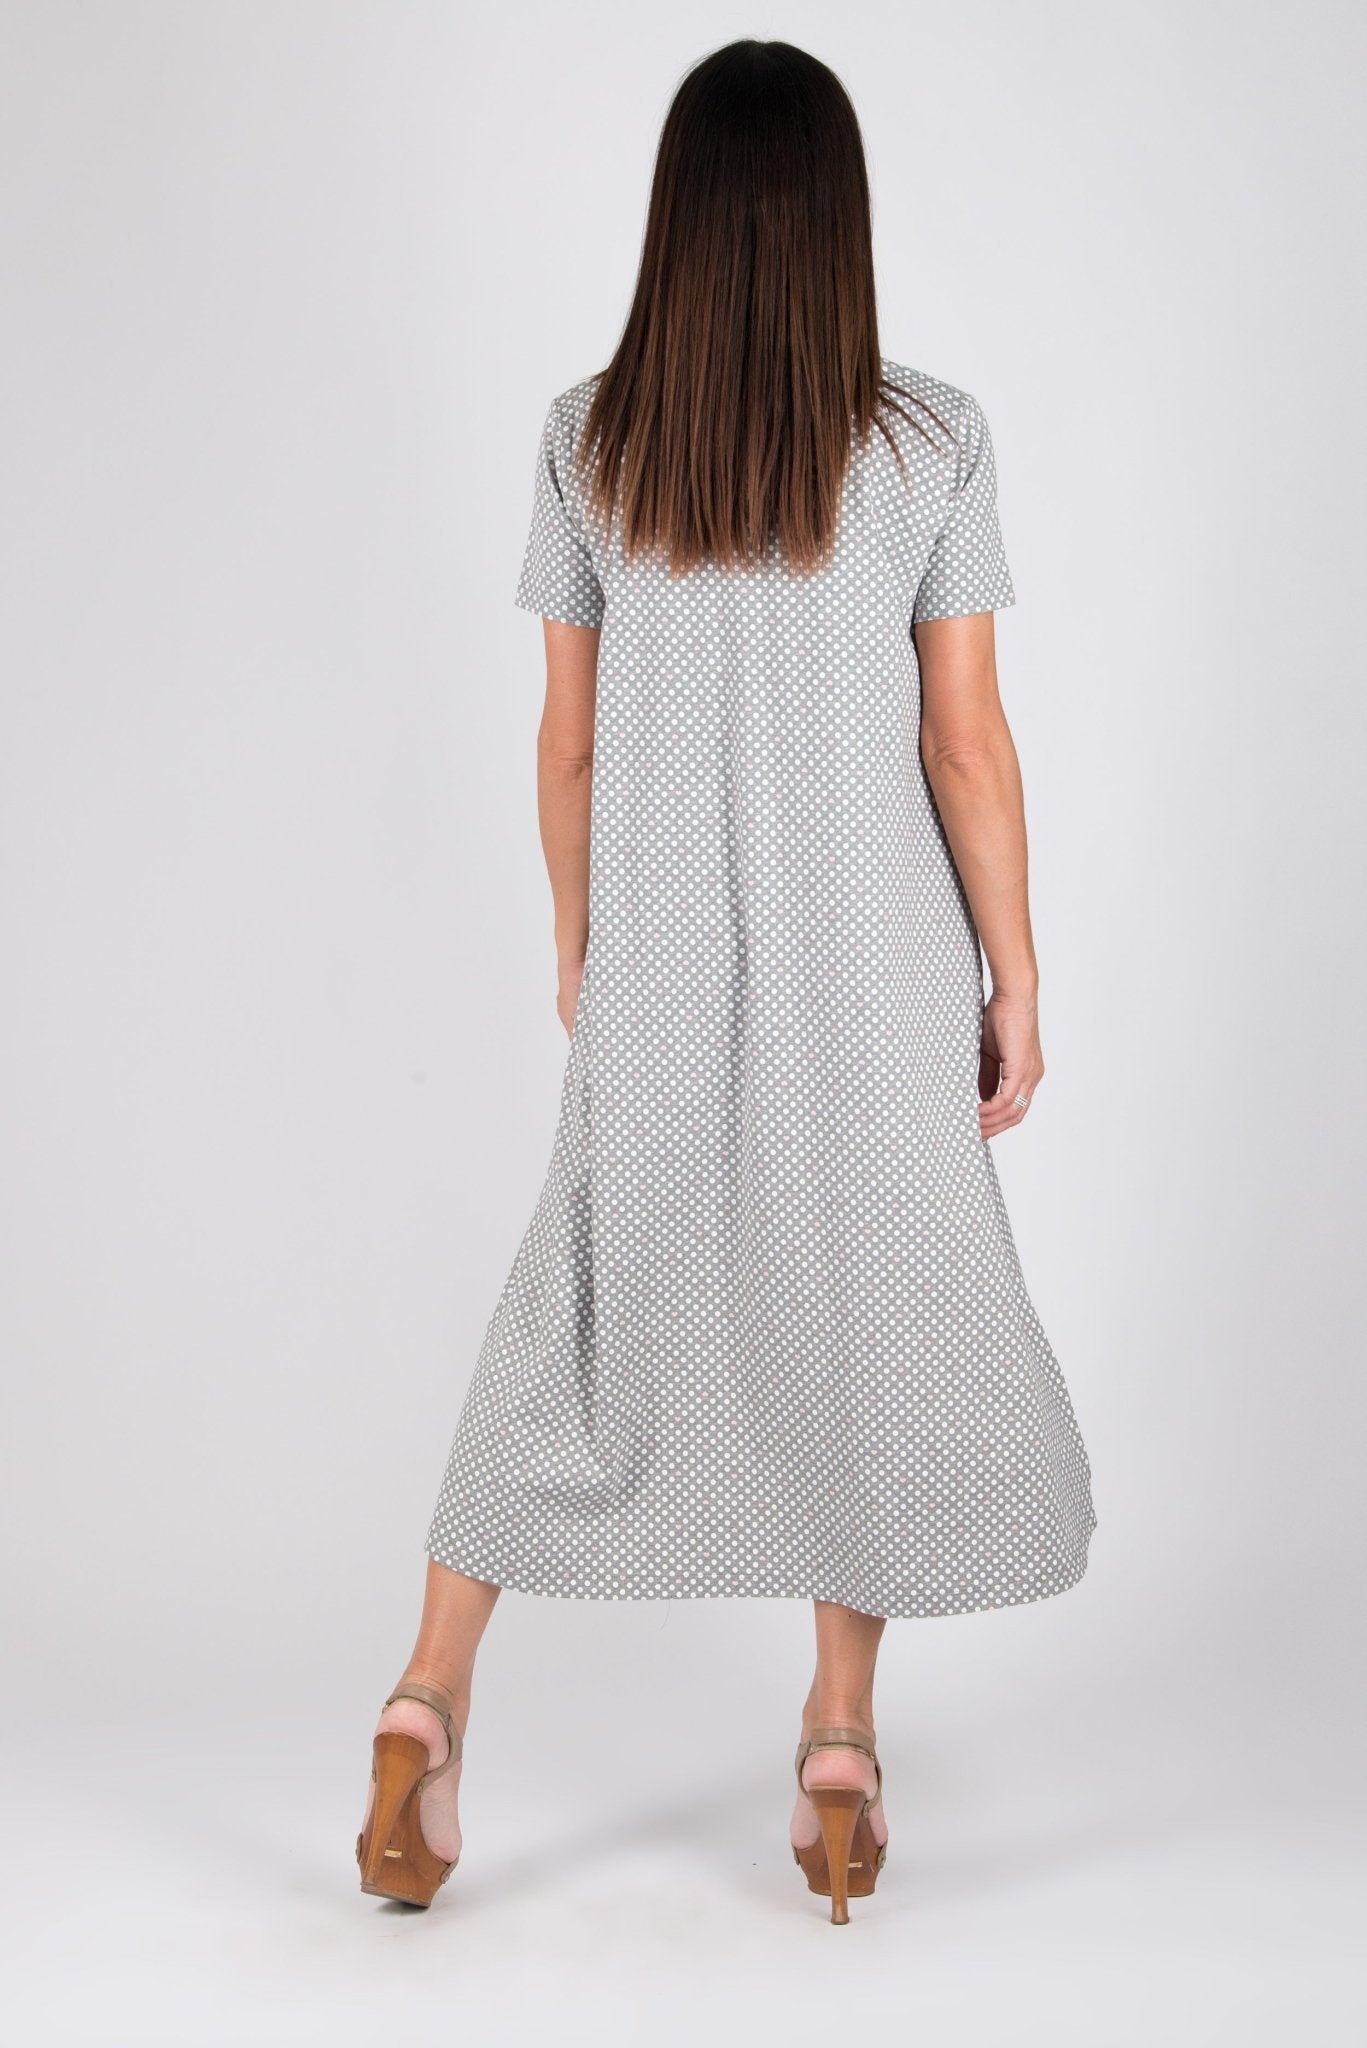 Printed Summer Cotton Dress EMY SALE - EUG FASHION EugFashion 